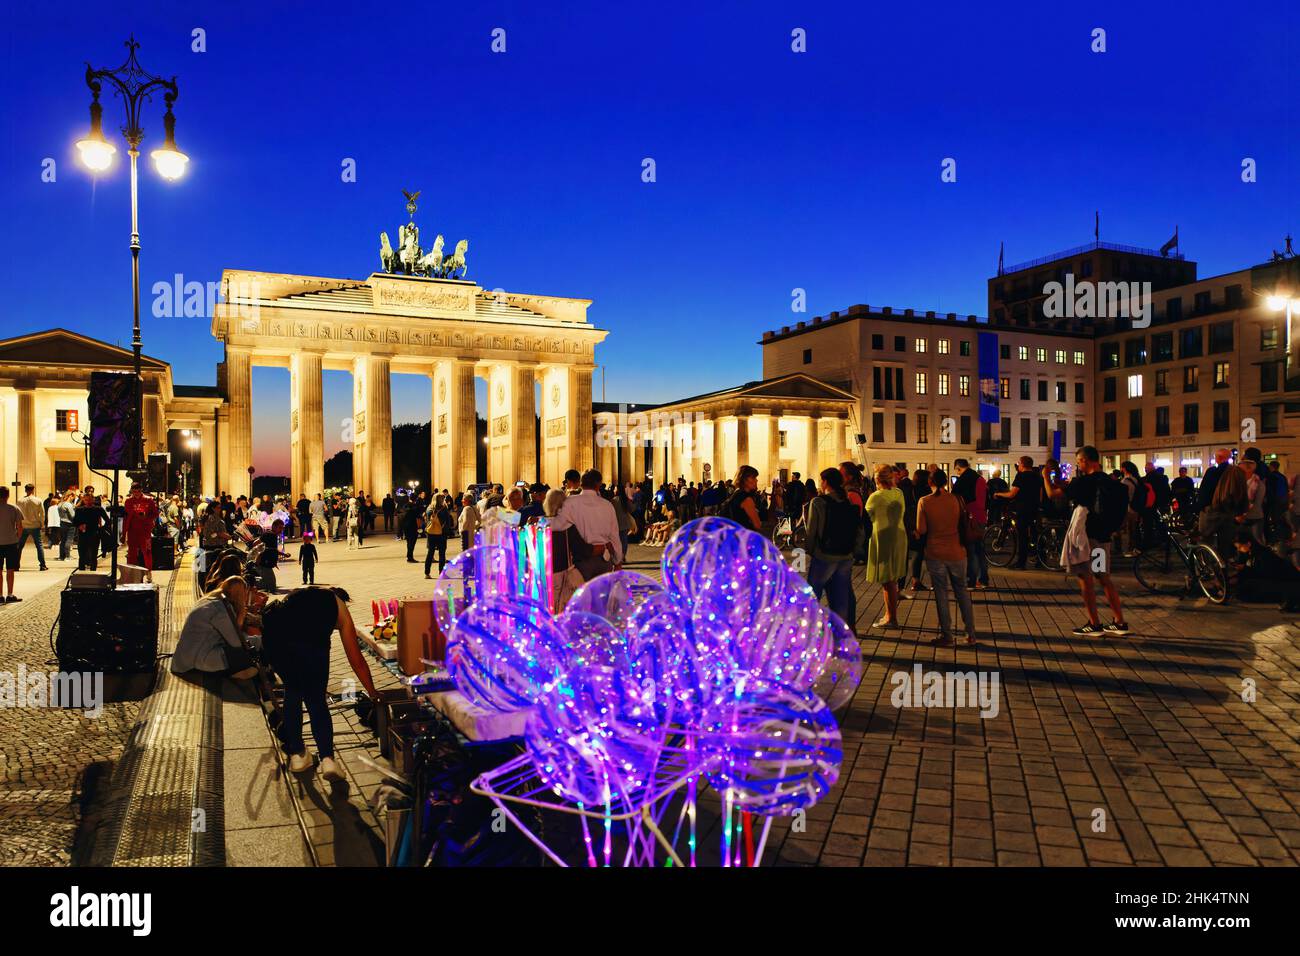 Brandenburg Gate during the Festival of Lights, Pariser Square, Unter den Linden, Berlin, Germany, Europe Stock Photo